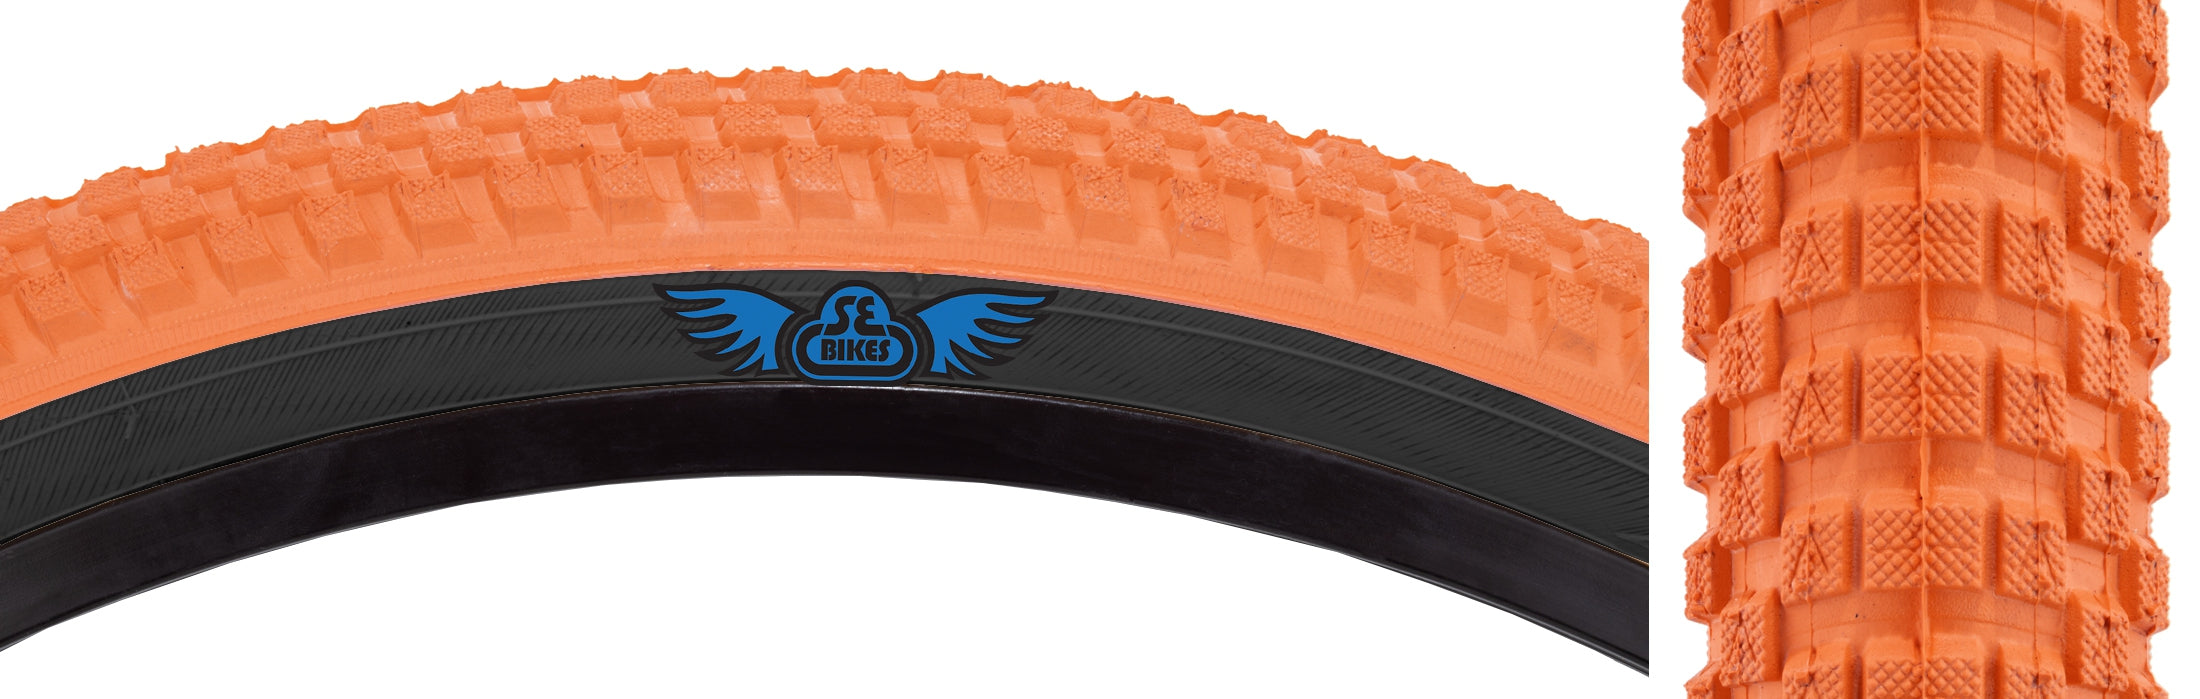 side view of se cub tire in orange black